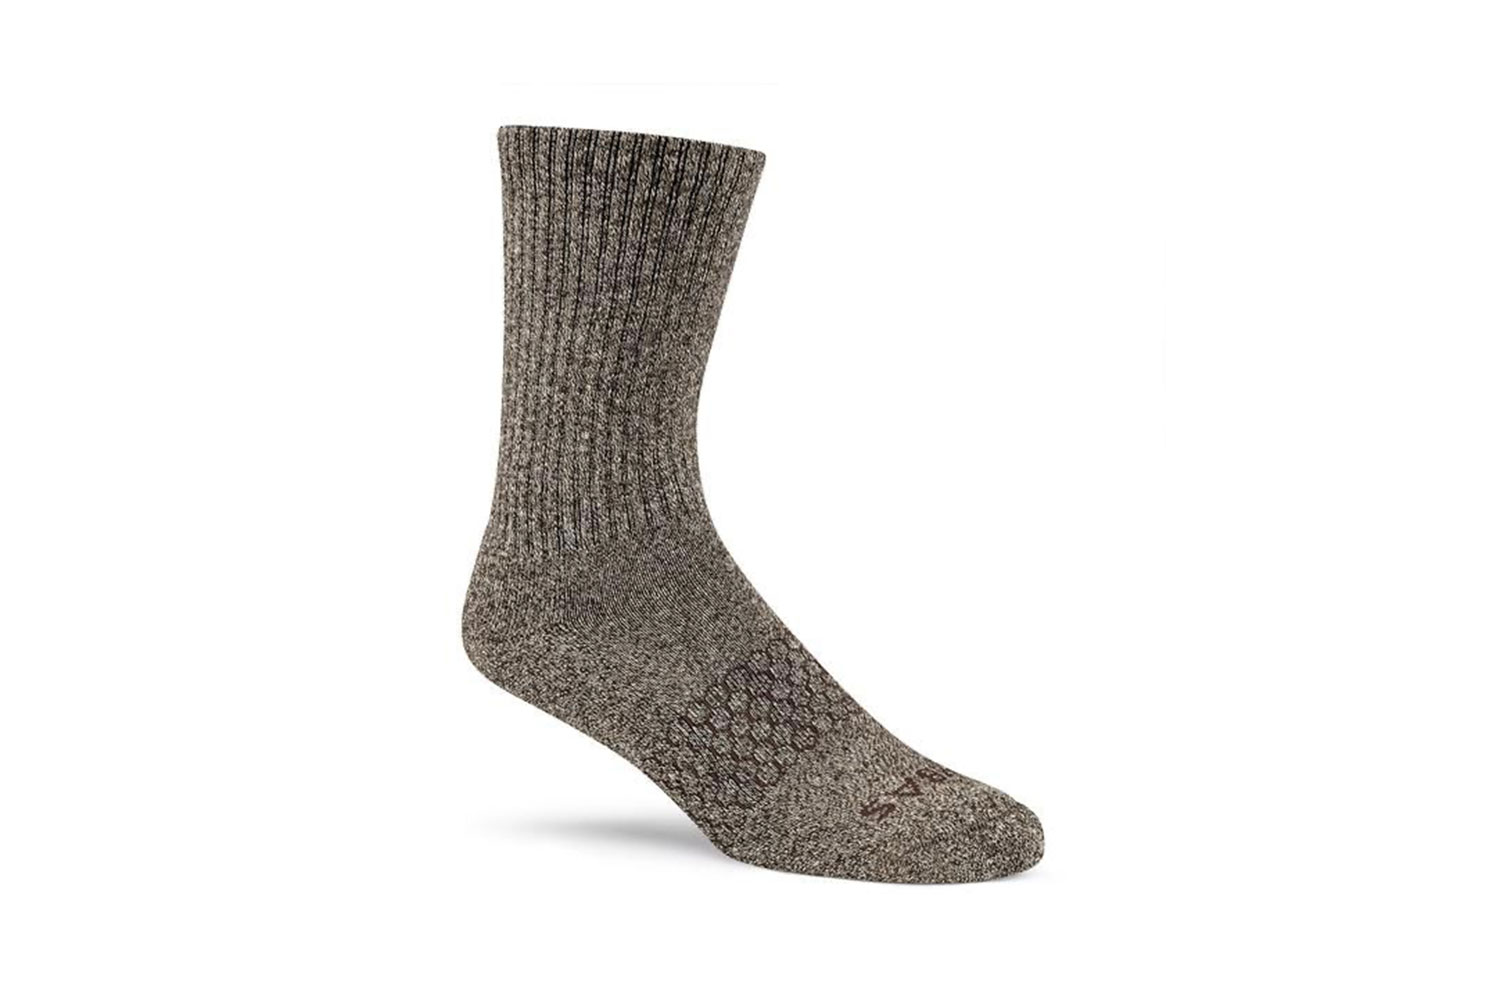 https://www.themanual.com/wp-content/uploads/sites/9/2020/02/bombas-mens-classic-marled-socks.jpg?fit=800%2C800&p=1